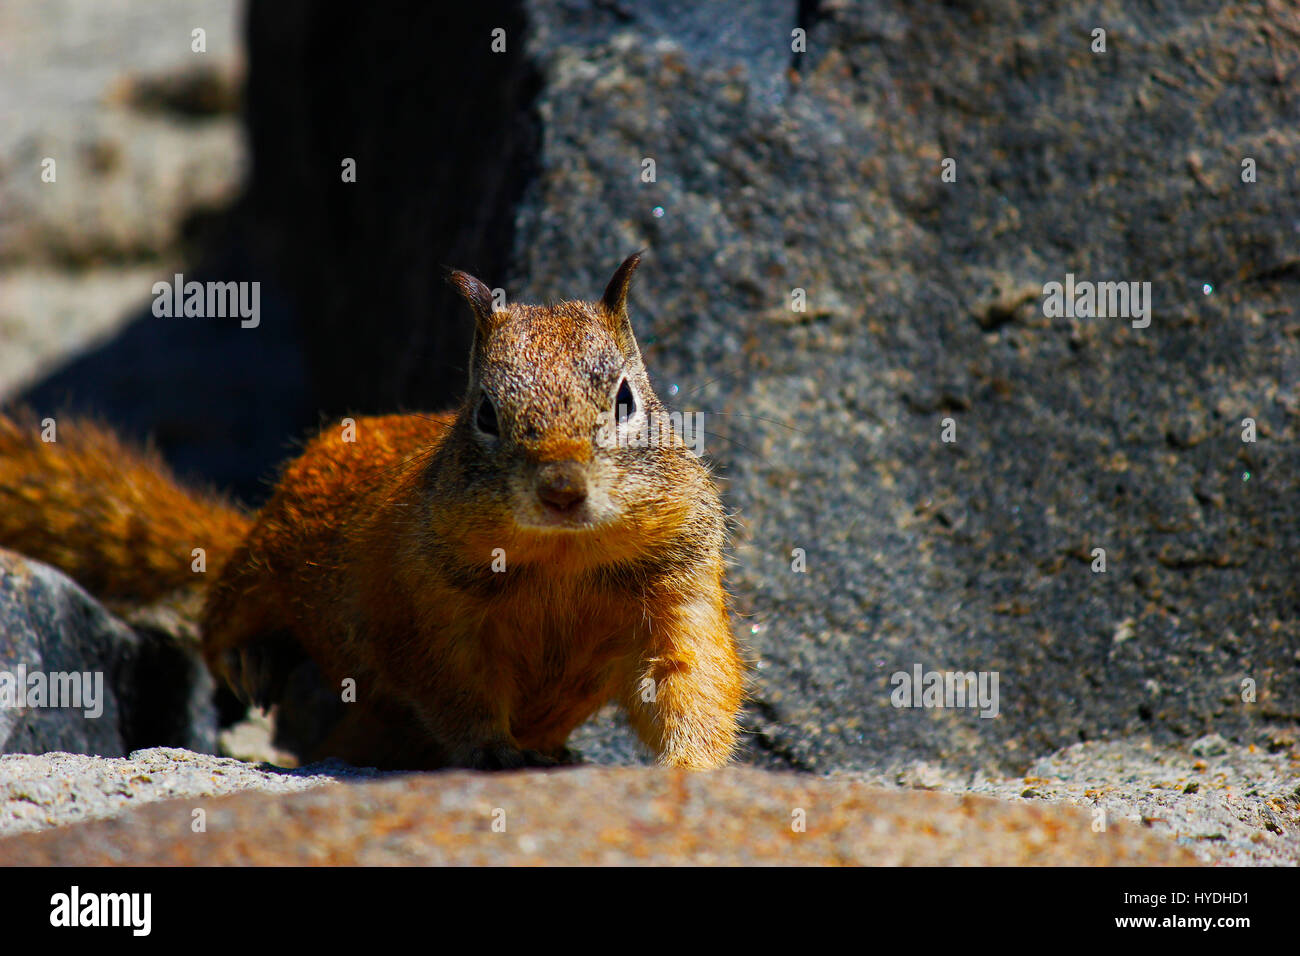 Squirrel looking at camera Banque D'Images